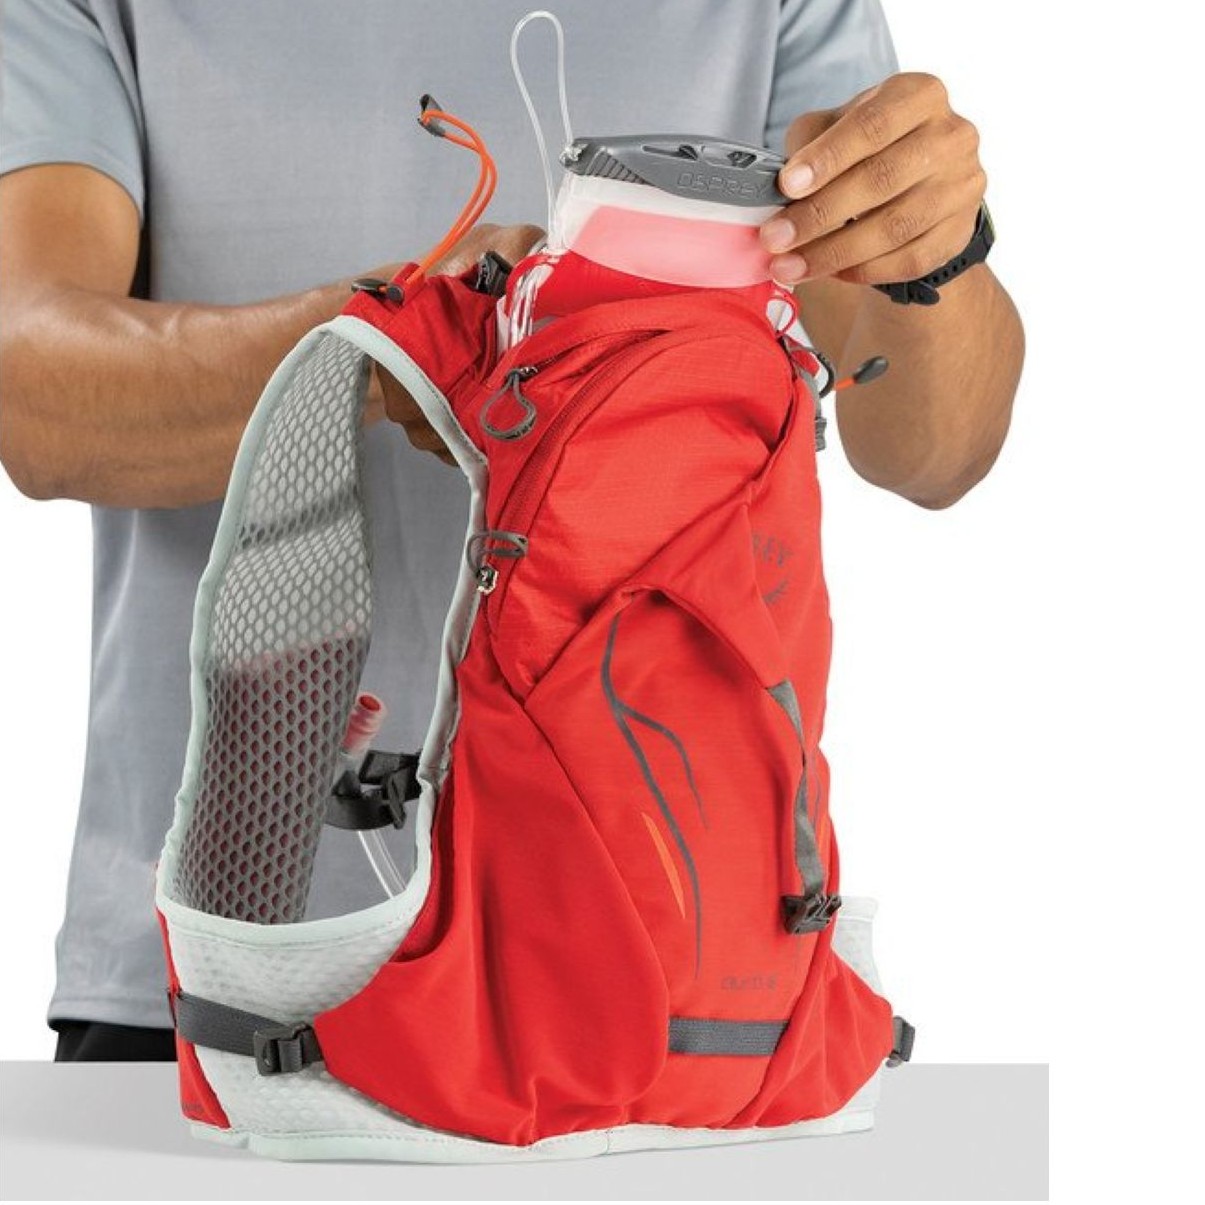 Osprey Duro 6 Hydration Vest Backpack